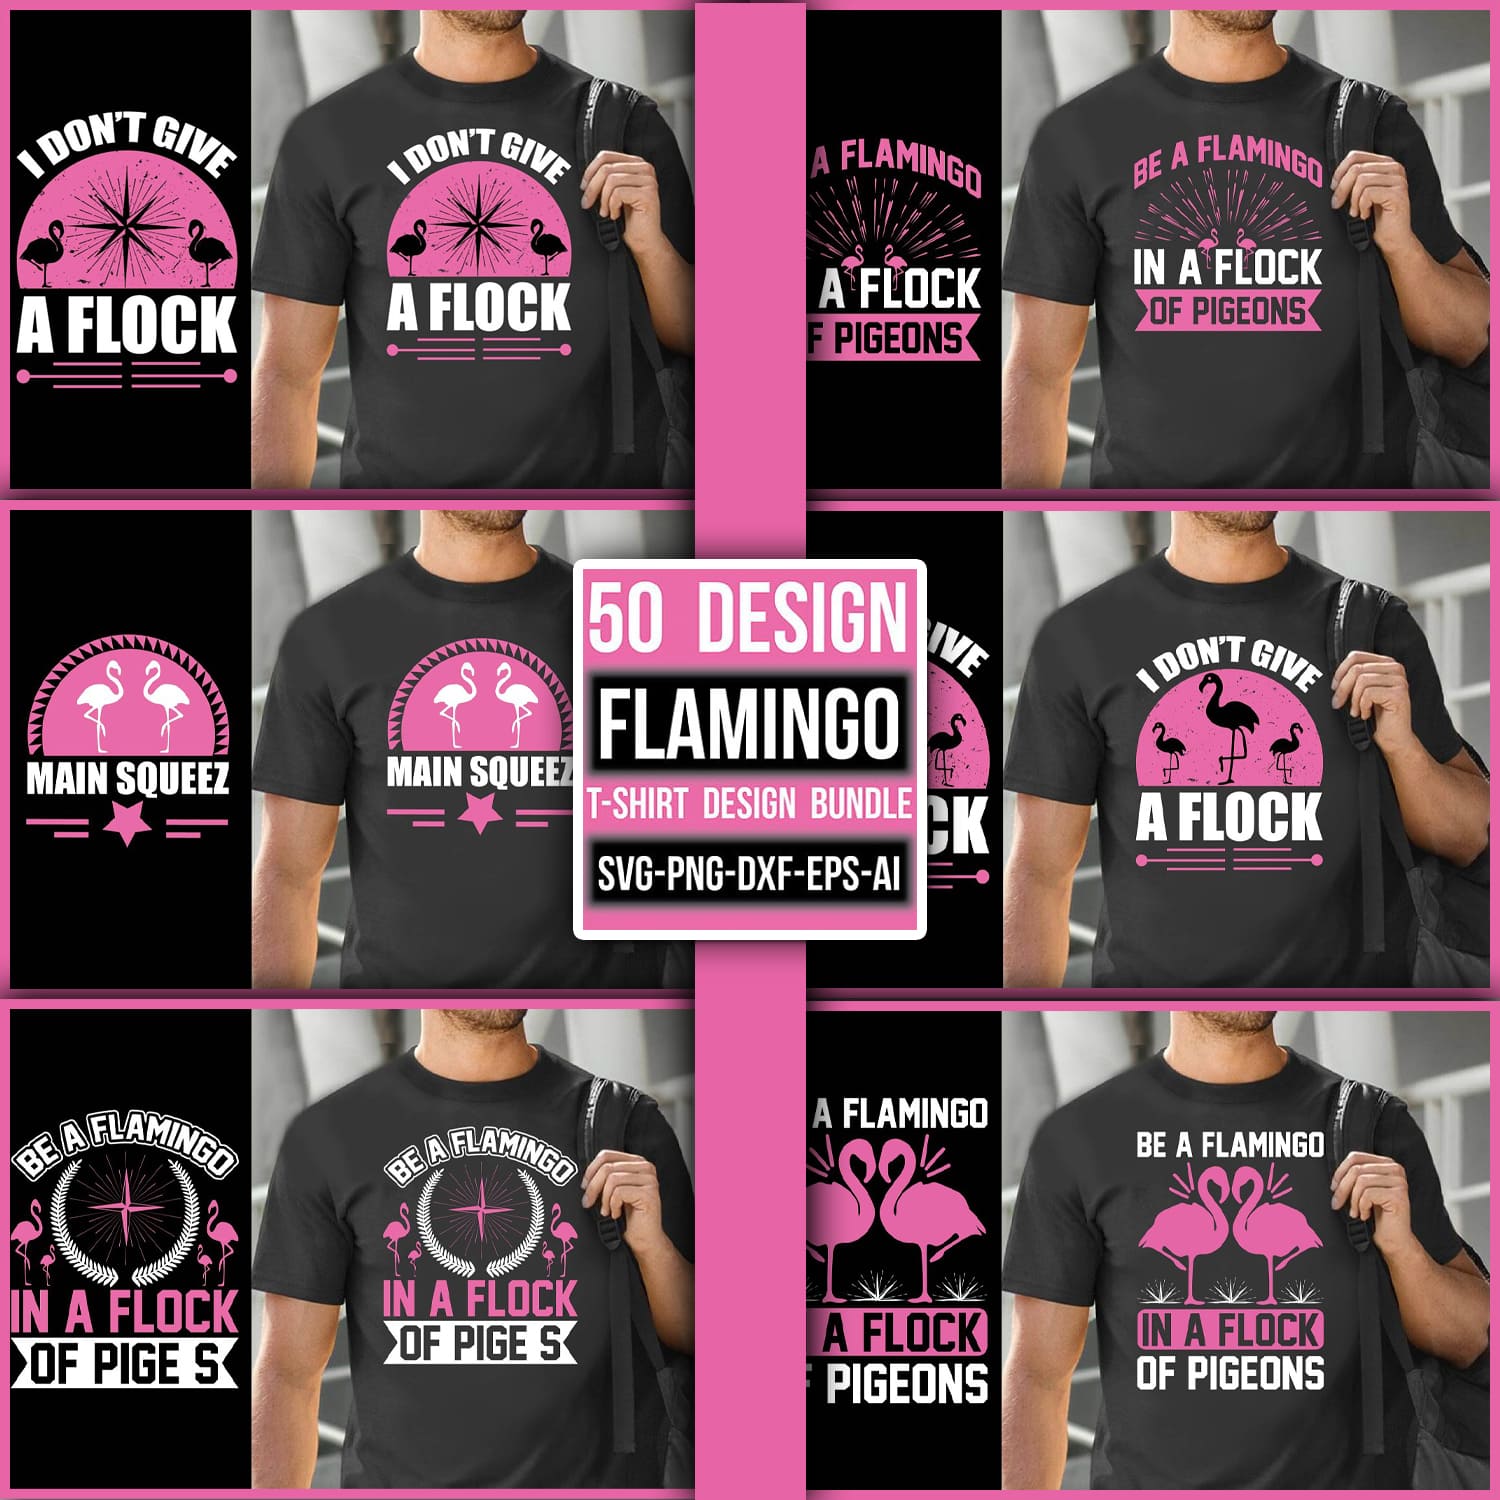 Flamingo T-shirt Design Bundle created by Shopdrop.